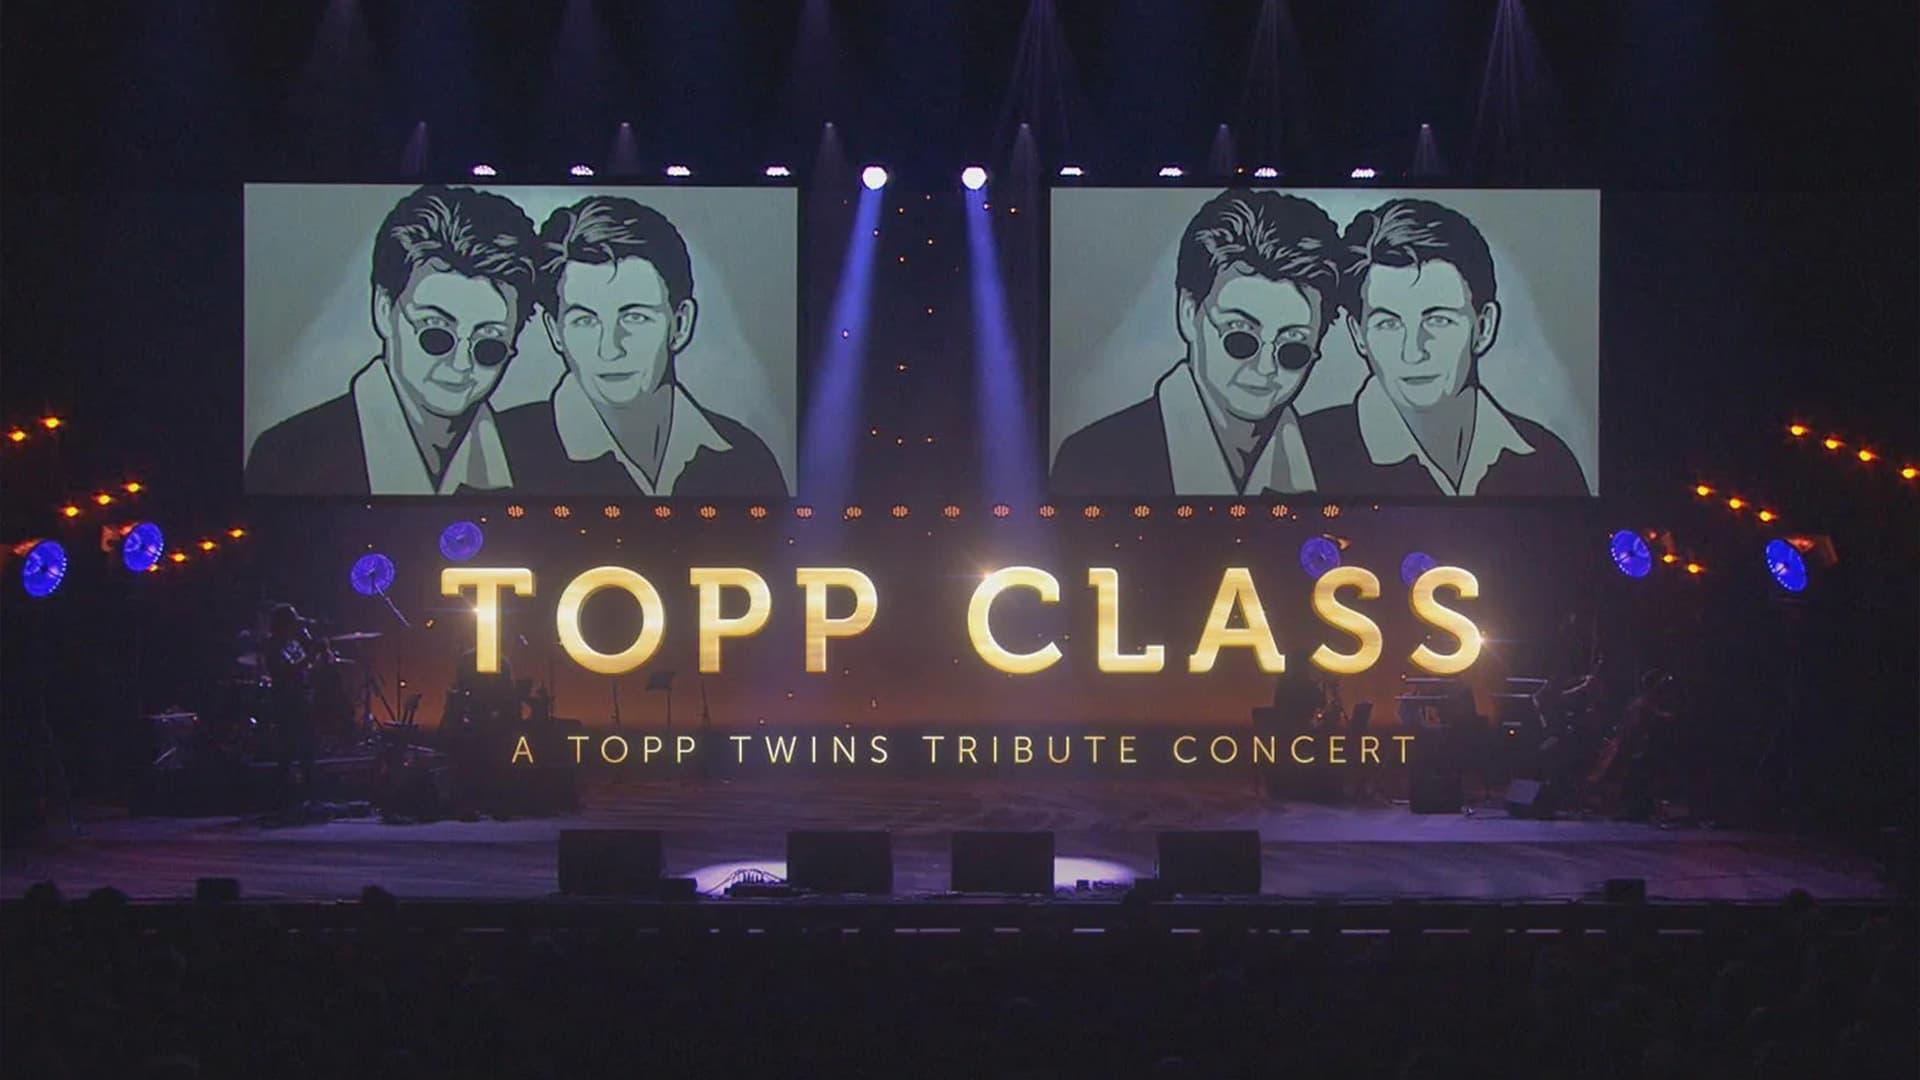 Topp Class: A Topp Twins Tribute Concert backdrop